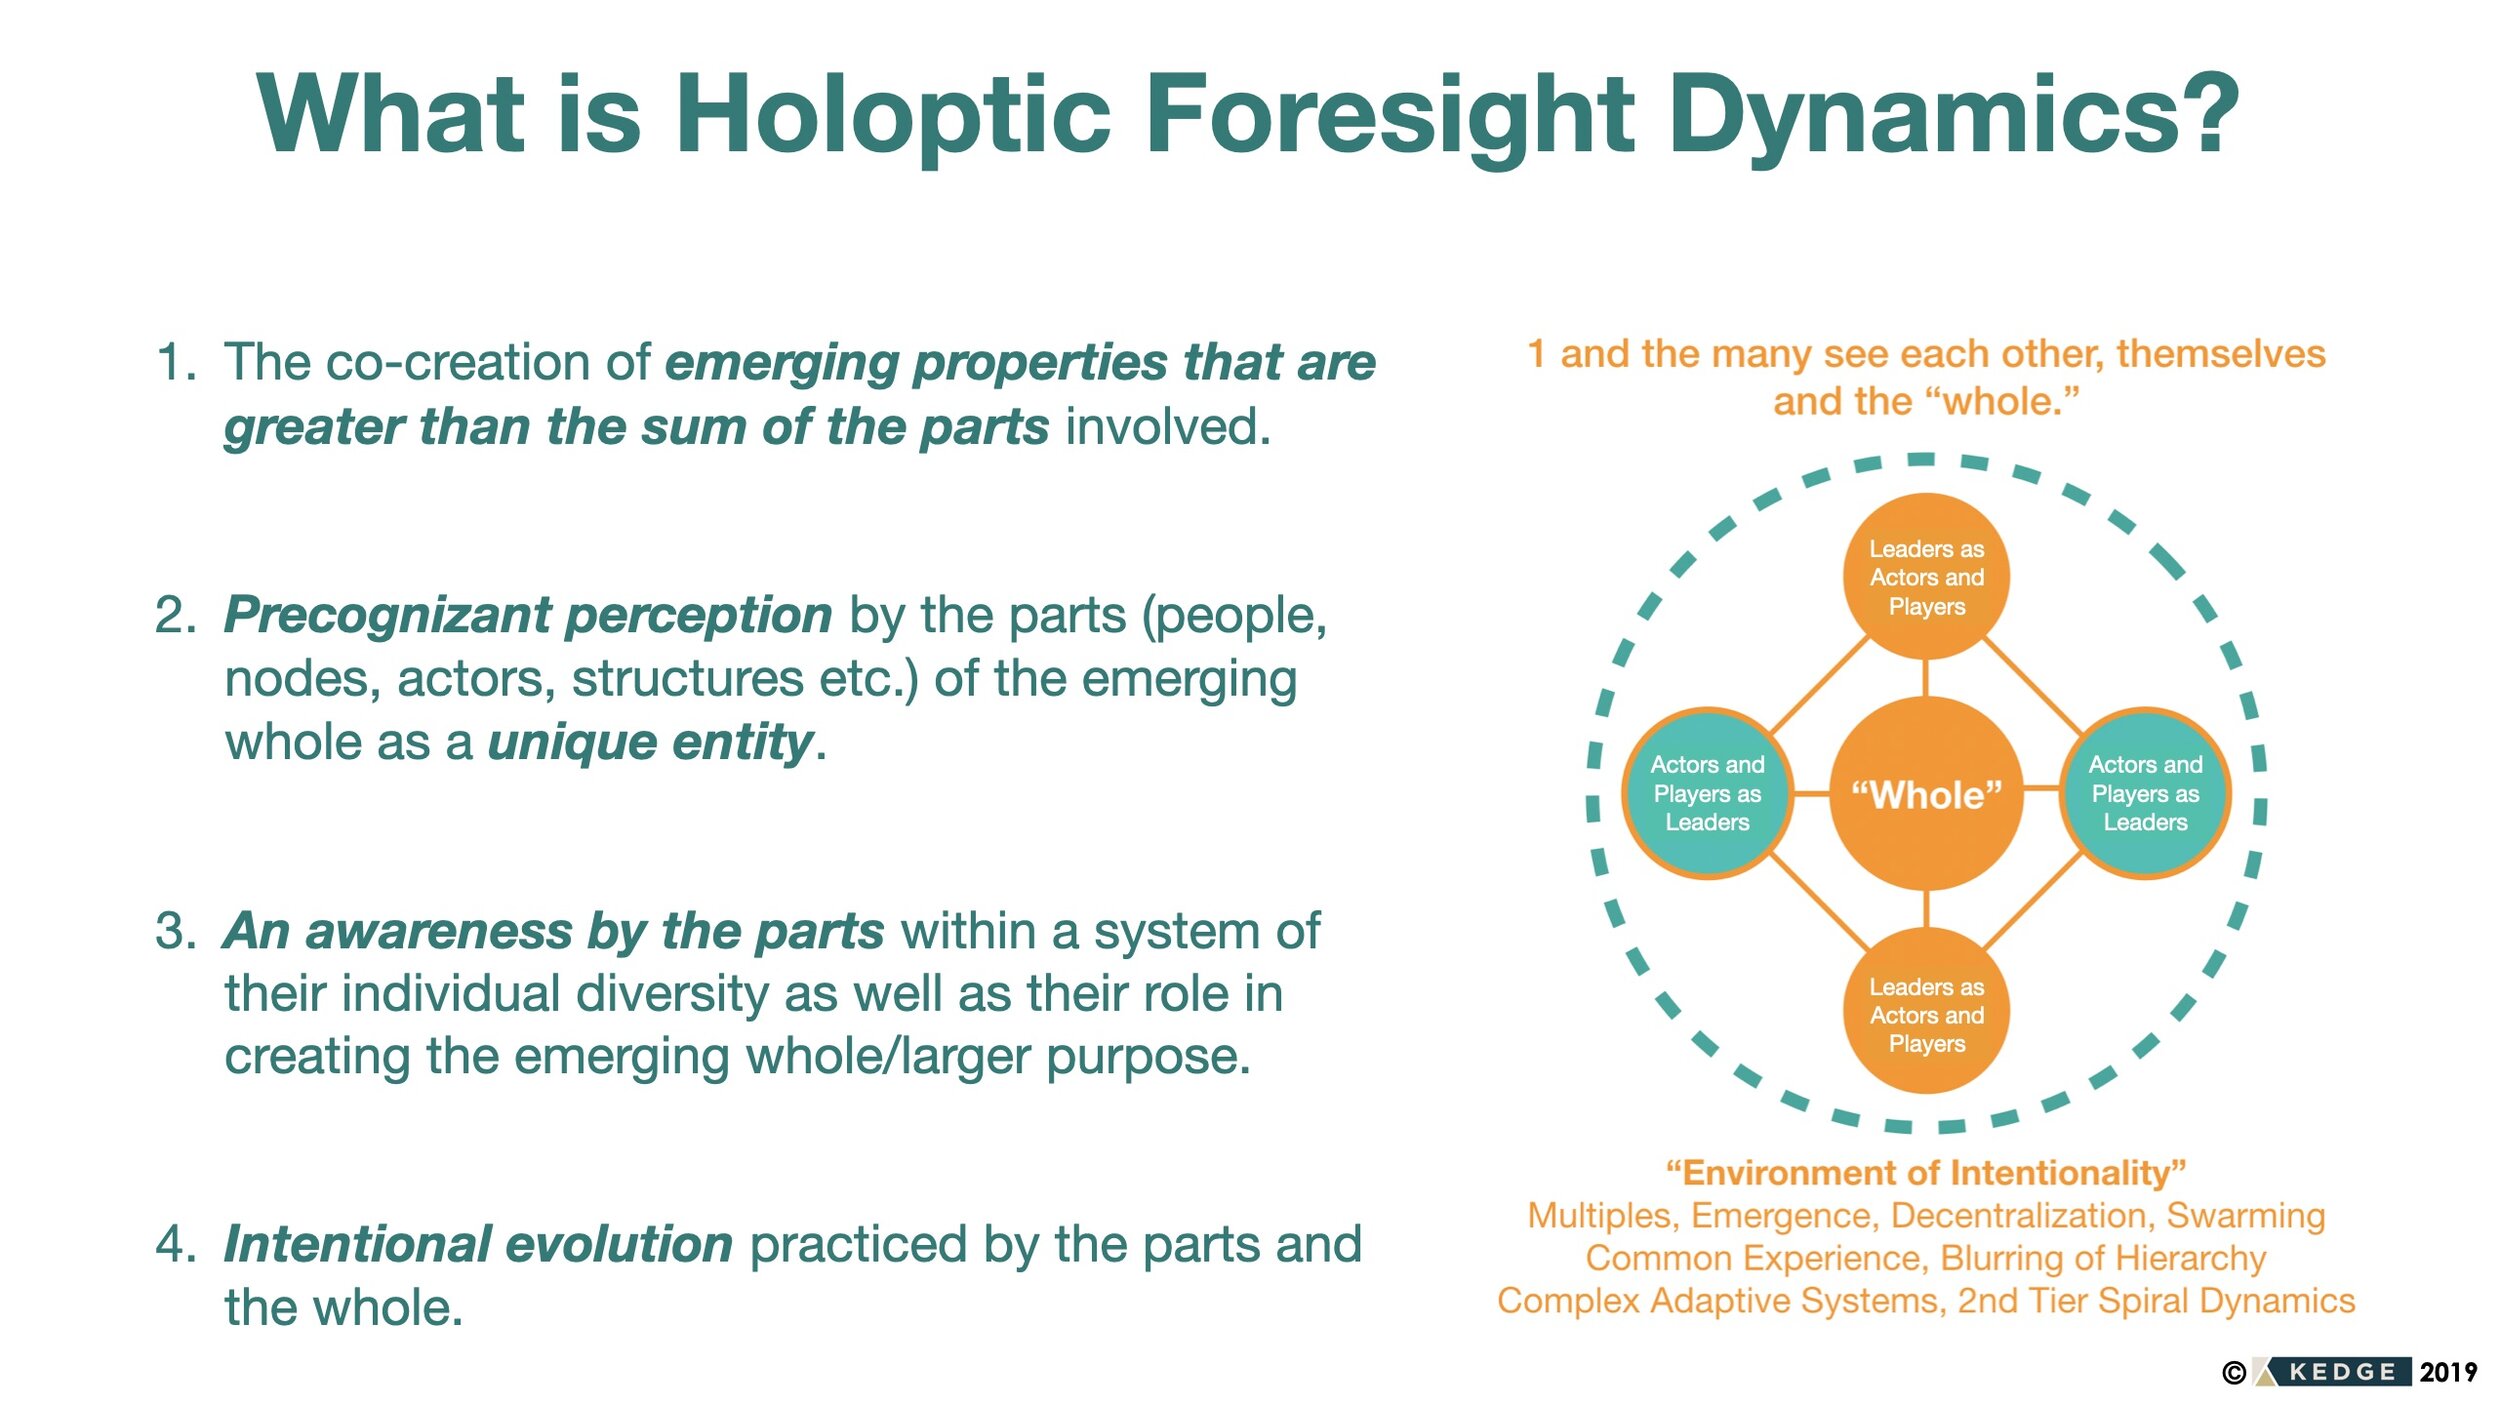 Holoptic Foresight Dynamics Leadership Diagram #2.jpg